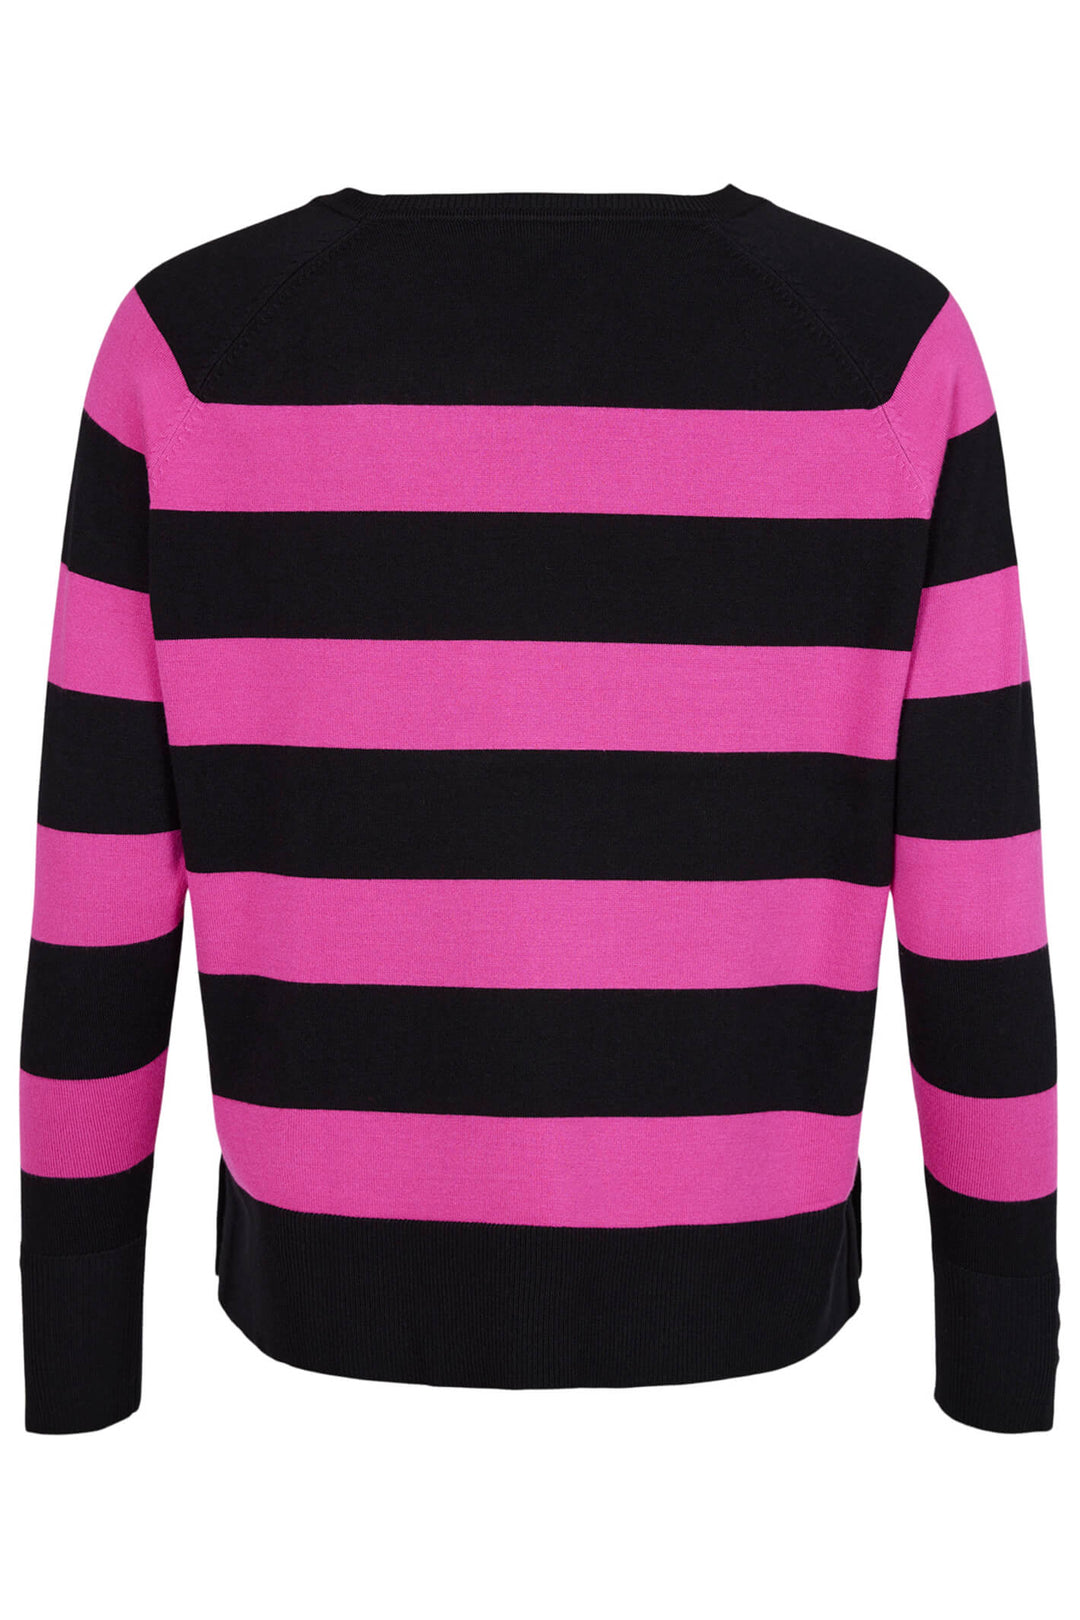 Sunday 6853 57 Pink Black Stripe Jumper - Experience Boutique